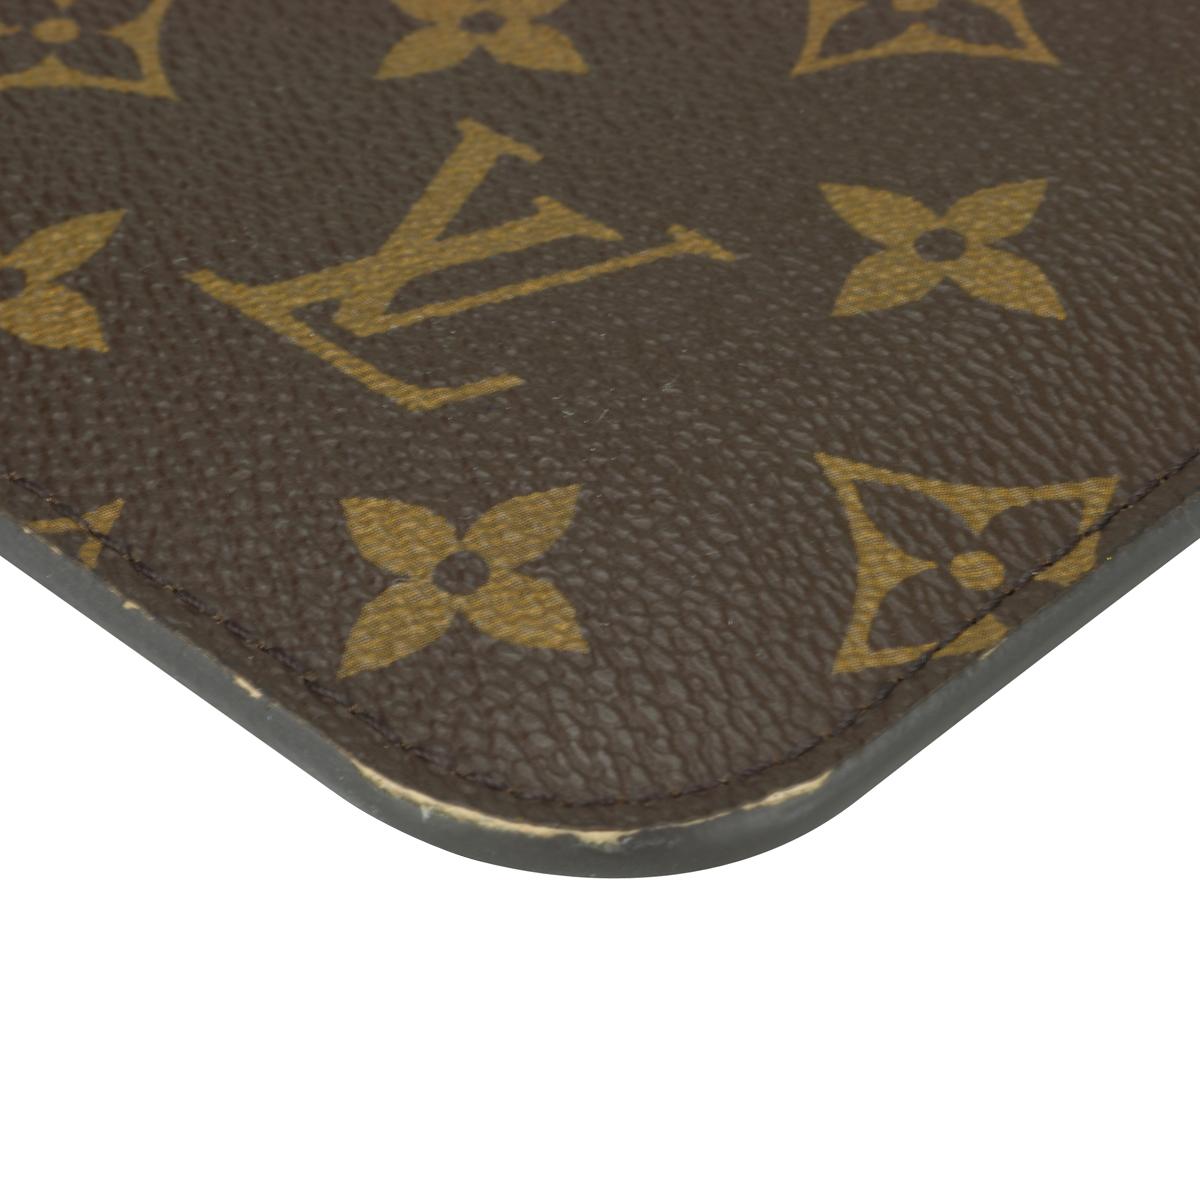 Louis Vuitton Neverfull MM Pochette Pouch in Monogram with Beige Interior 2016 6